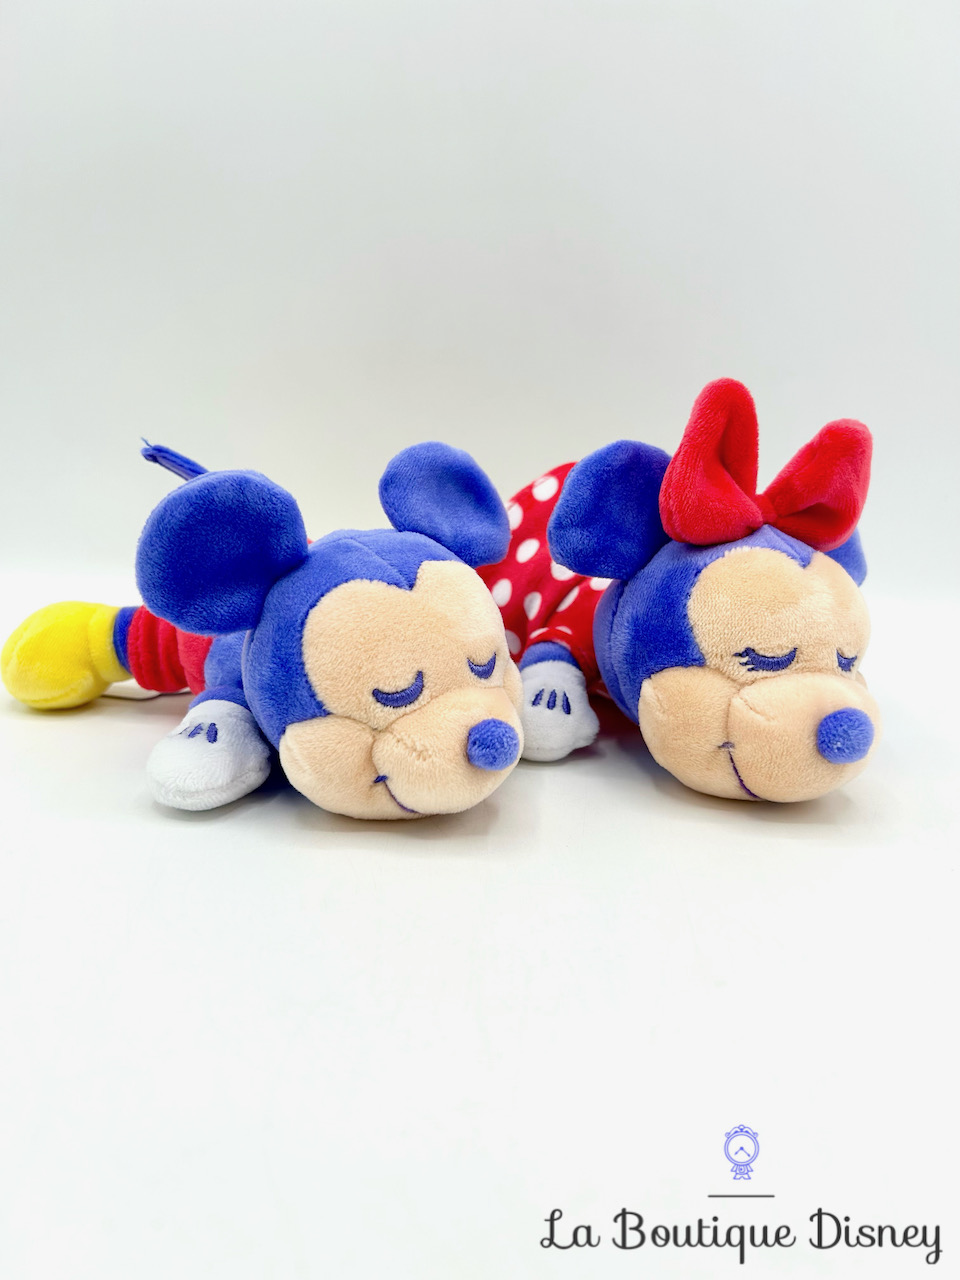 Peluches Mickey Minnie Mouse Cuddleez miniature Disney Store dort couché 20 cm